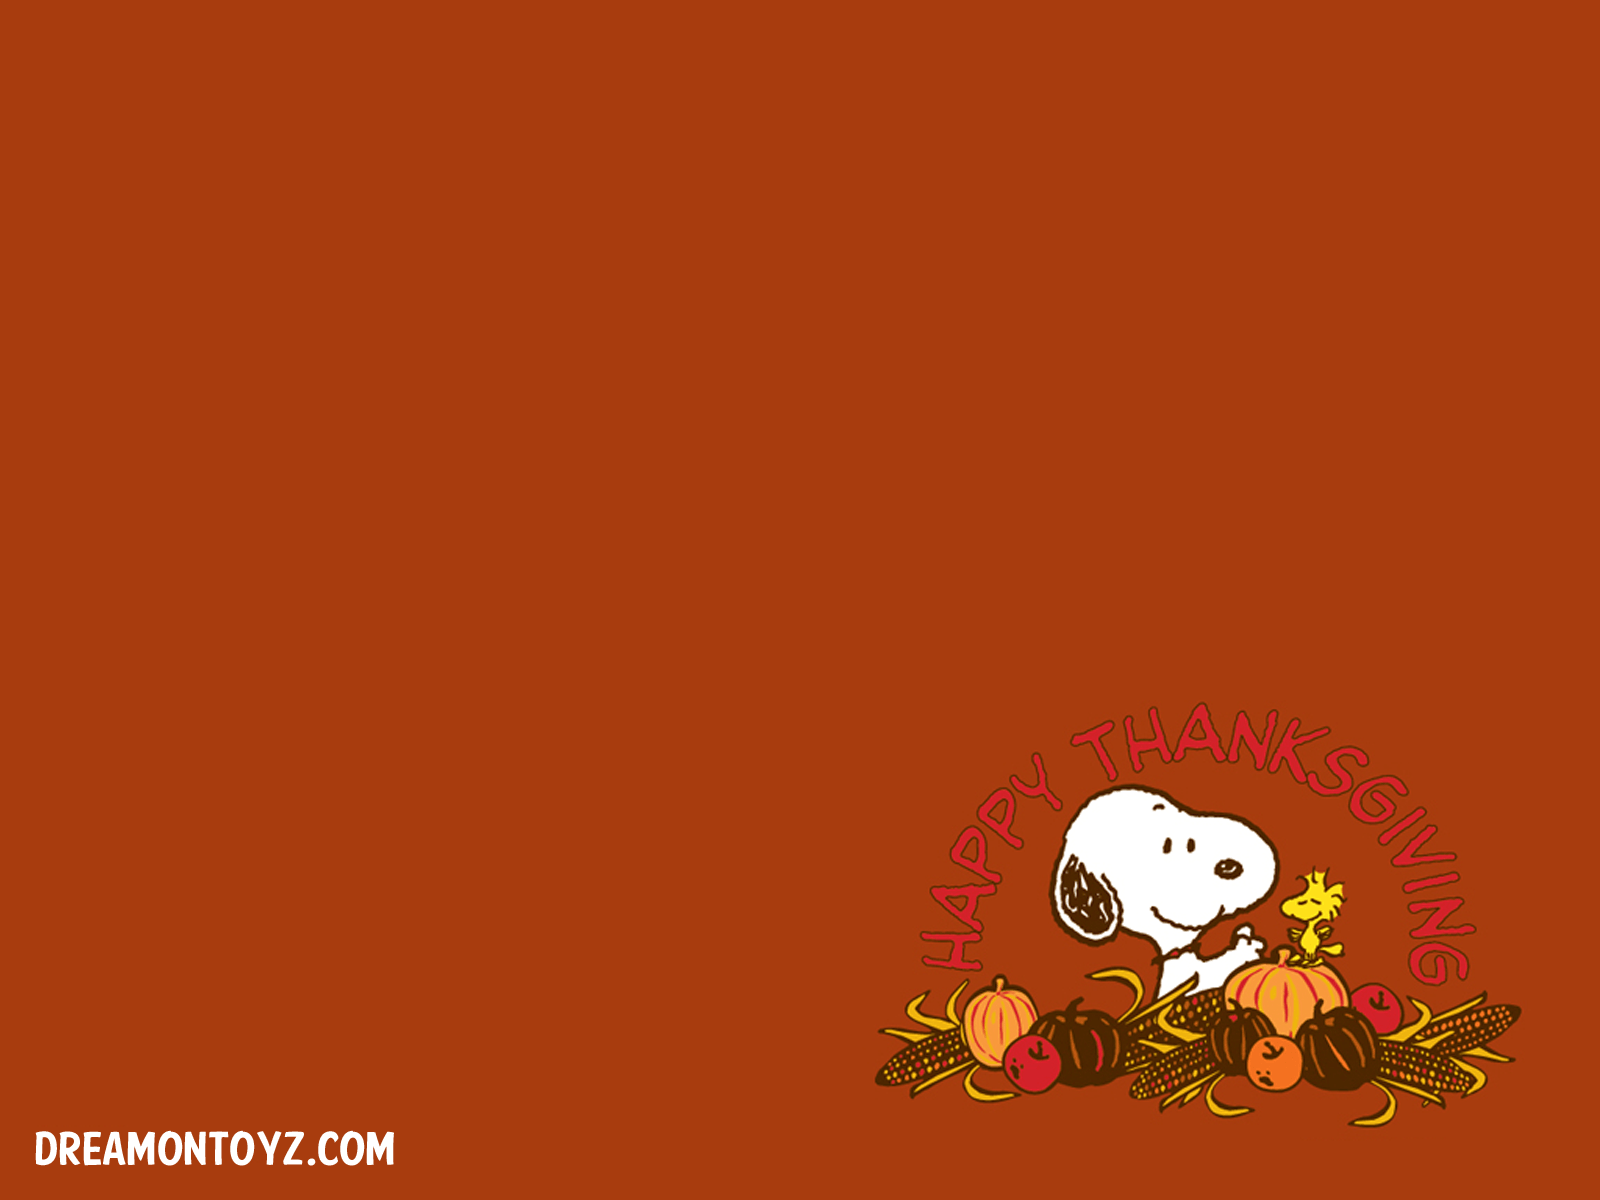 FREE Cartoon Graphics / Pics / Gifs / Photographs: Peanuts Snoopy Thanksgiving wallpaper. Snoopy wallpaper, Thanksgiving wallpaper, Free thanksgiving wallpaper